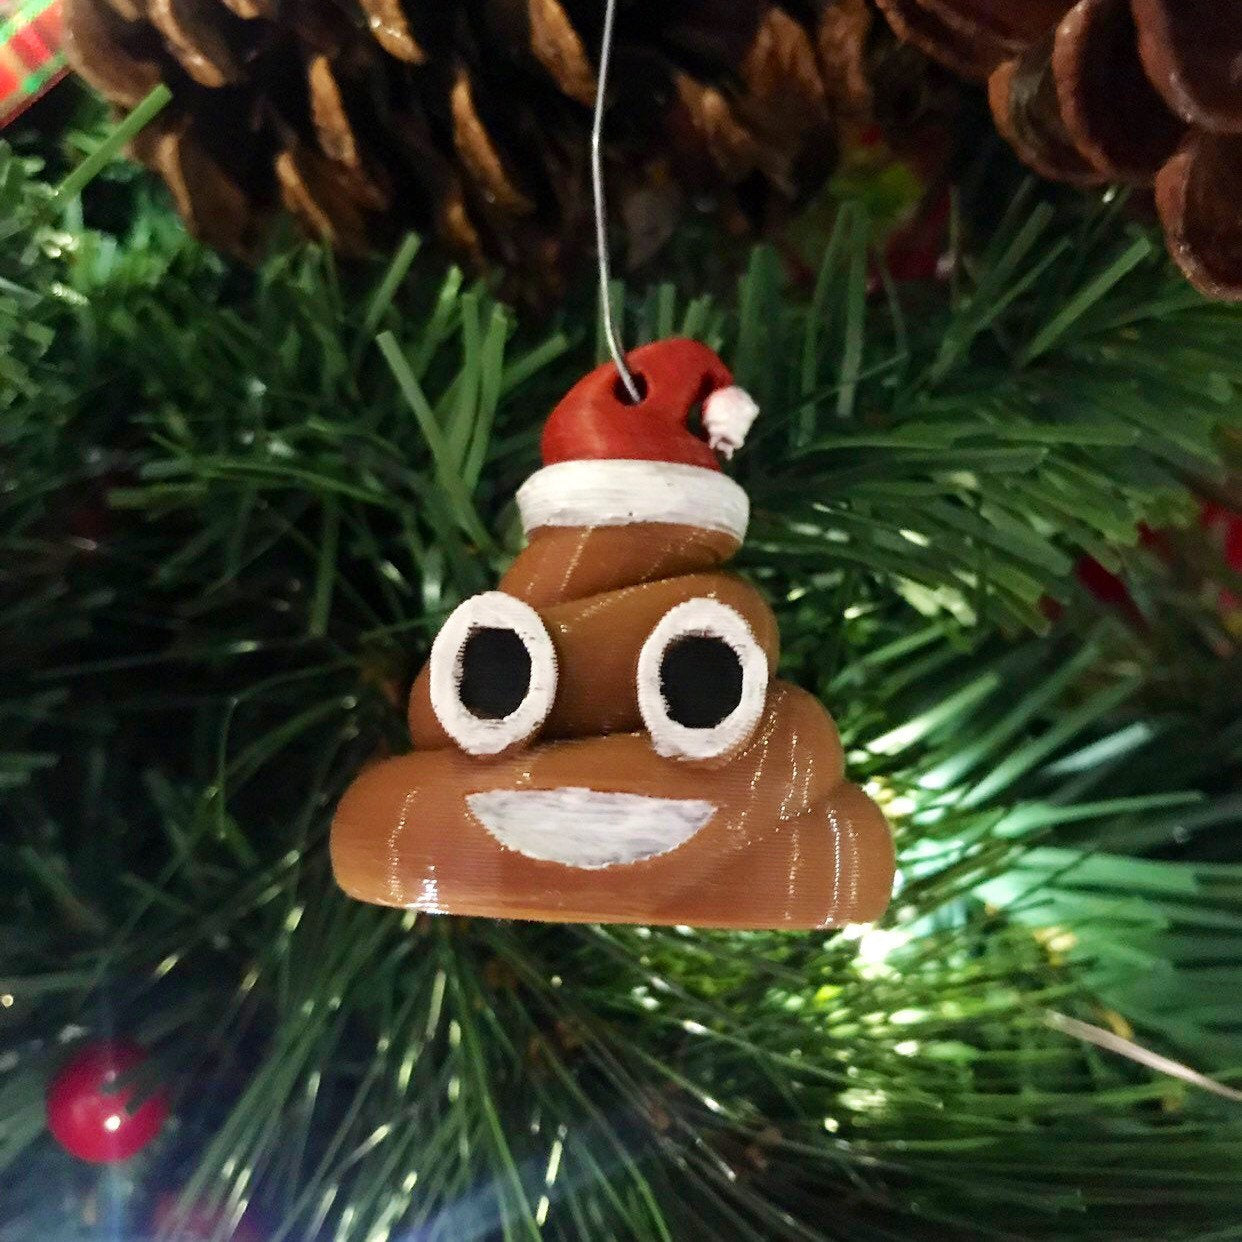 Christmas poop meme emoji decor Ornament | eBay